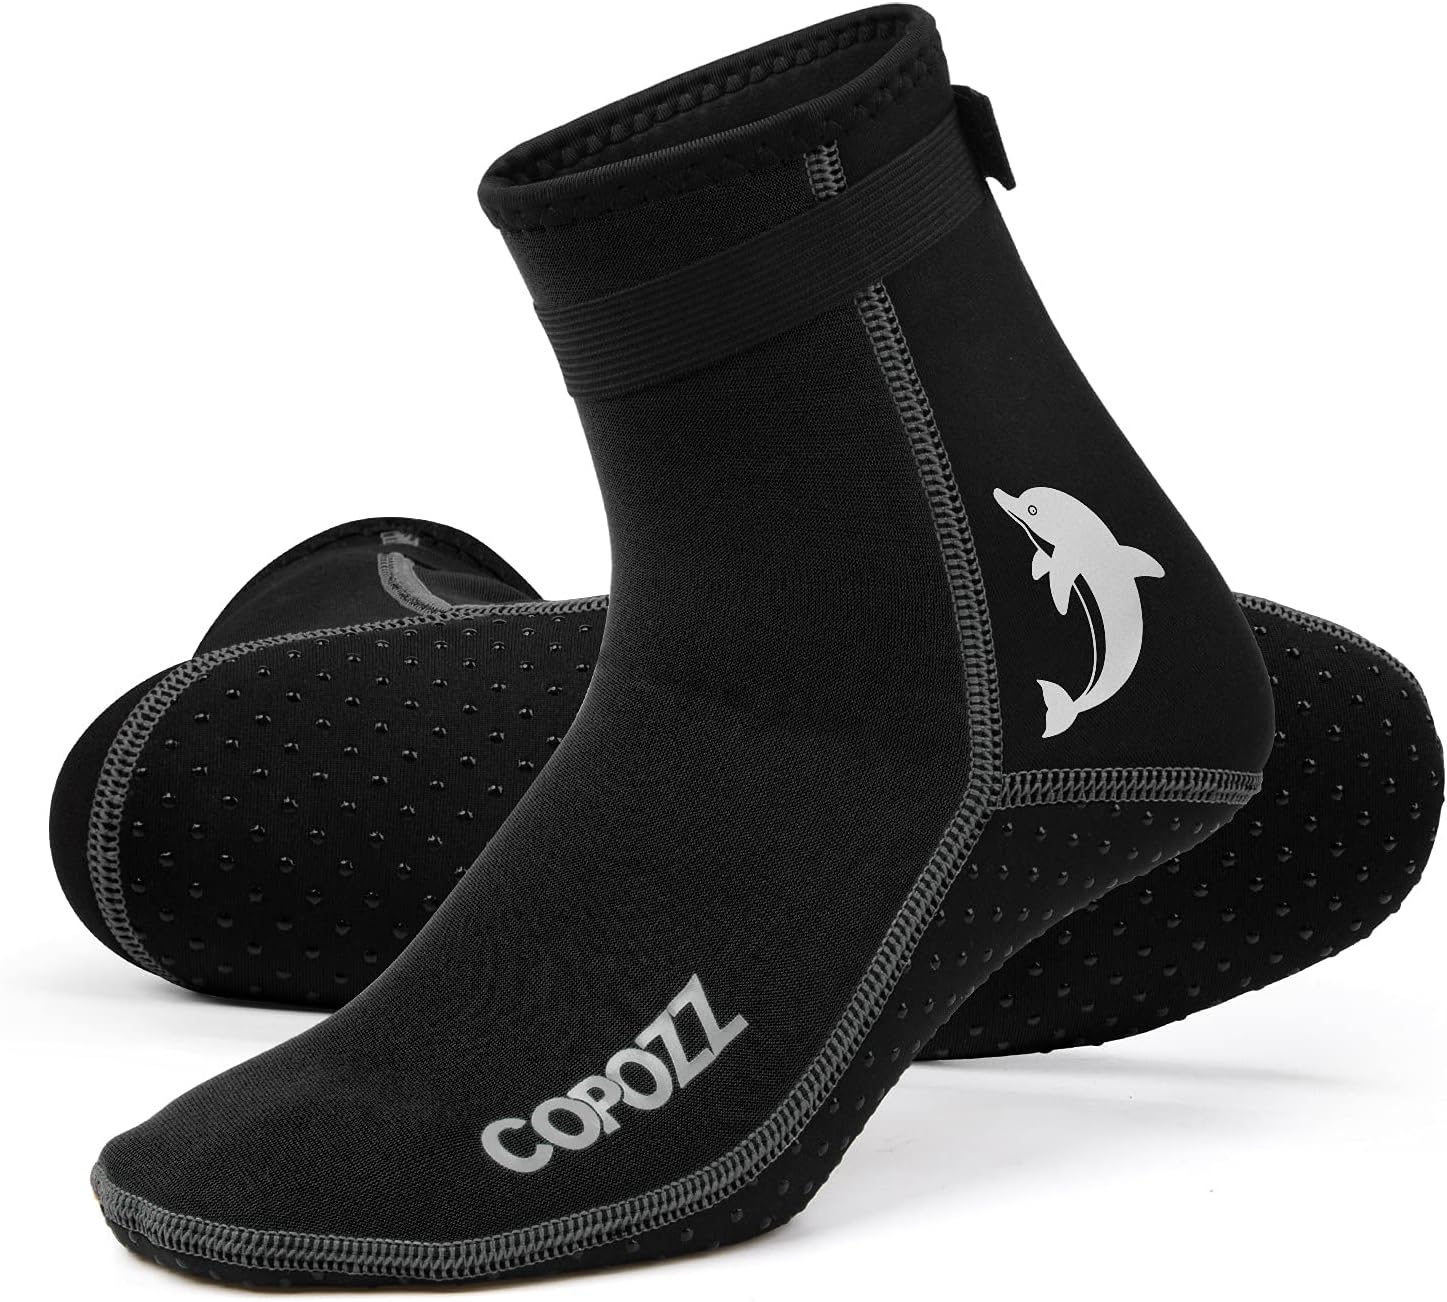 COPOZZ Diving Socks 3mm Neoprene Beach Water Socks-Anti Slip for Snorkel Swim Youth Men Women